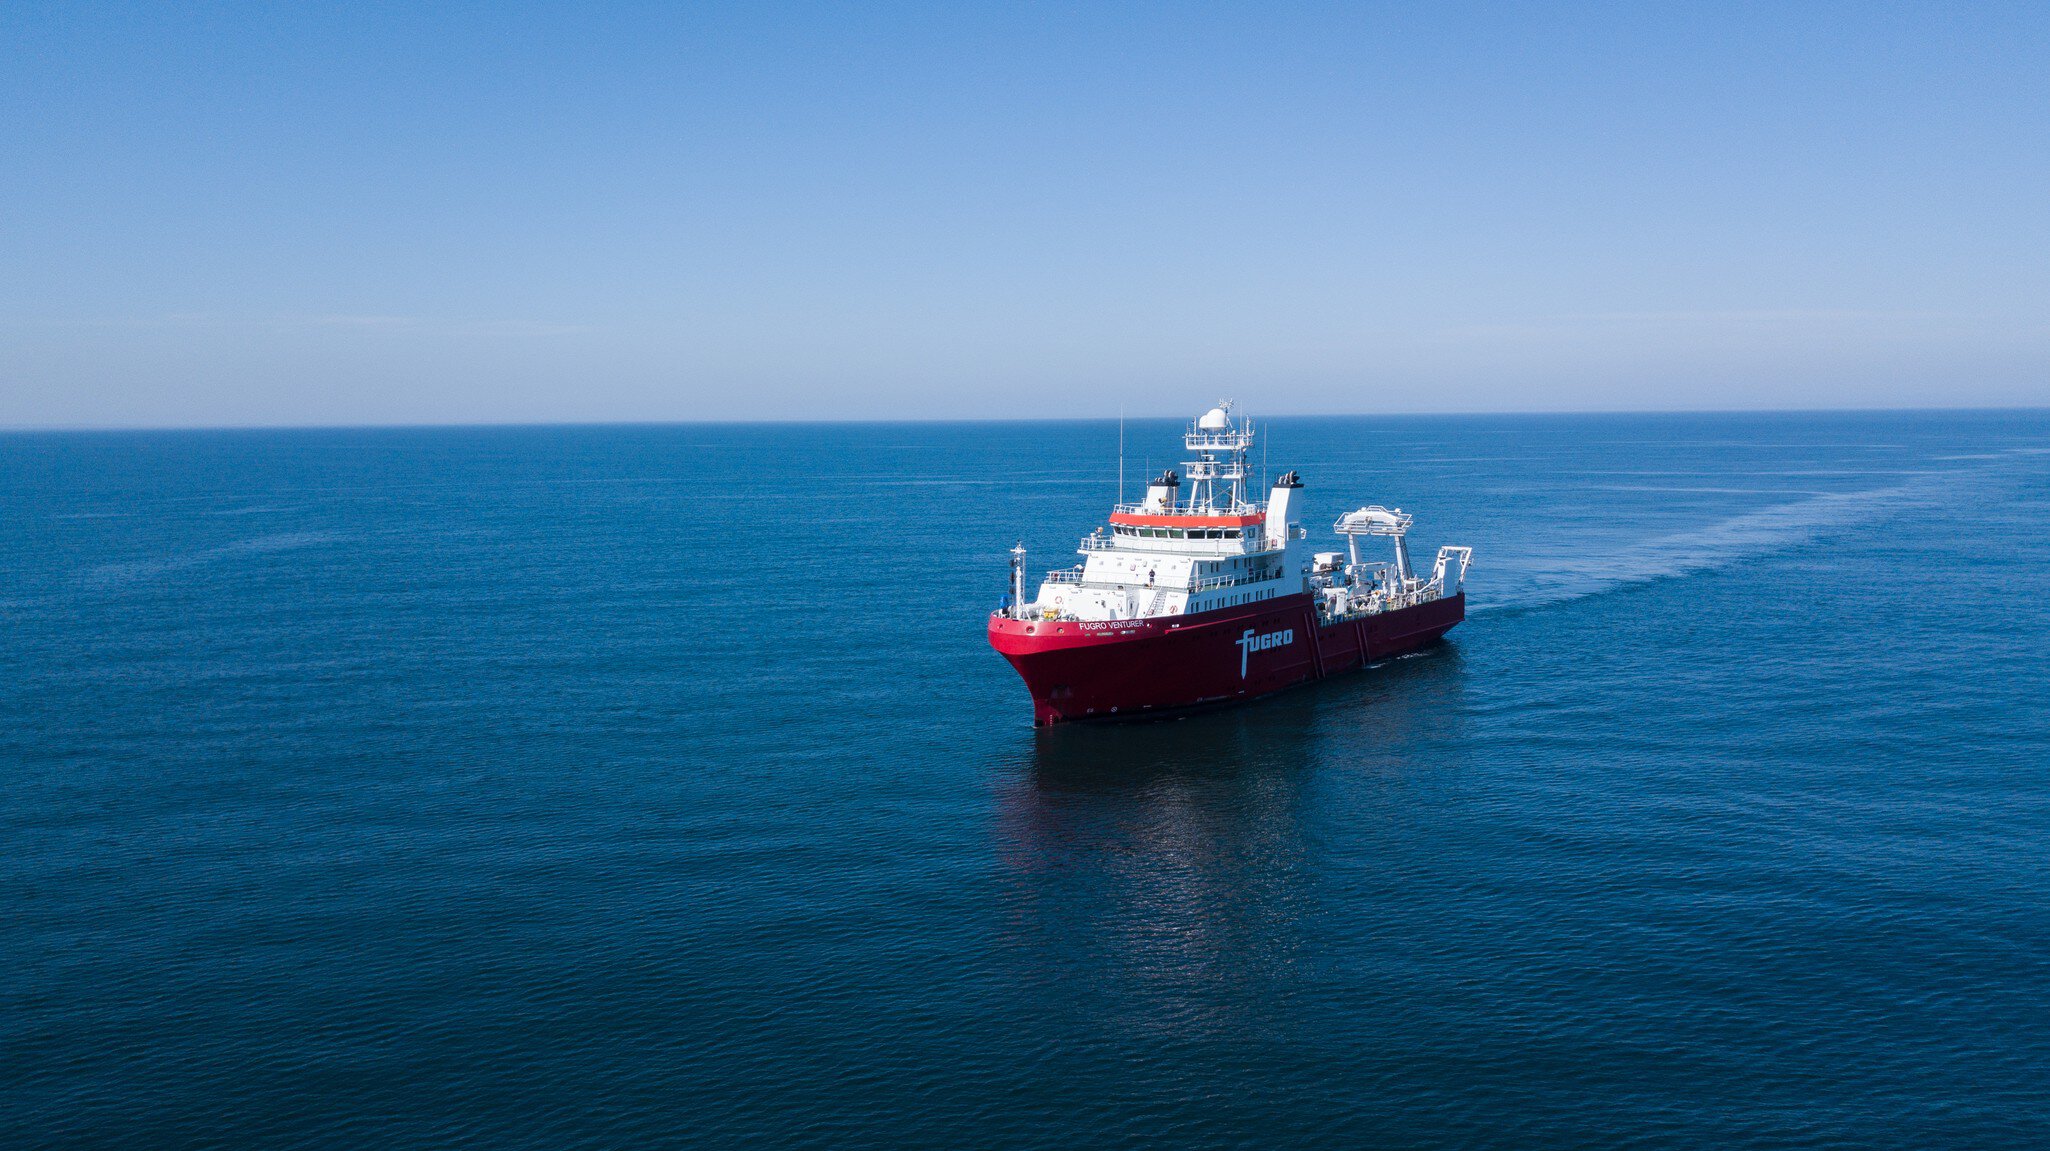 Fugro Venturer offshore Scotland undertaking geophysical survey for power cables for Scottish Islands